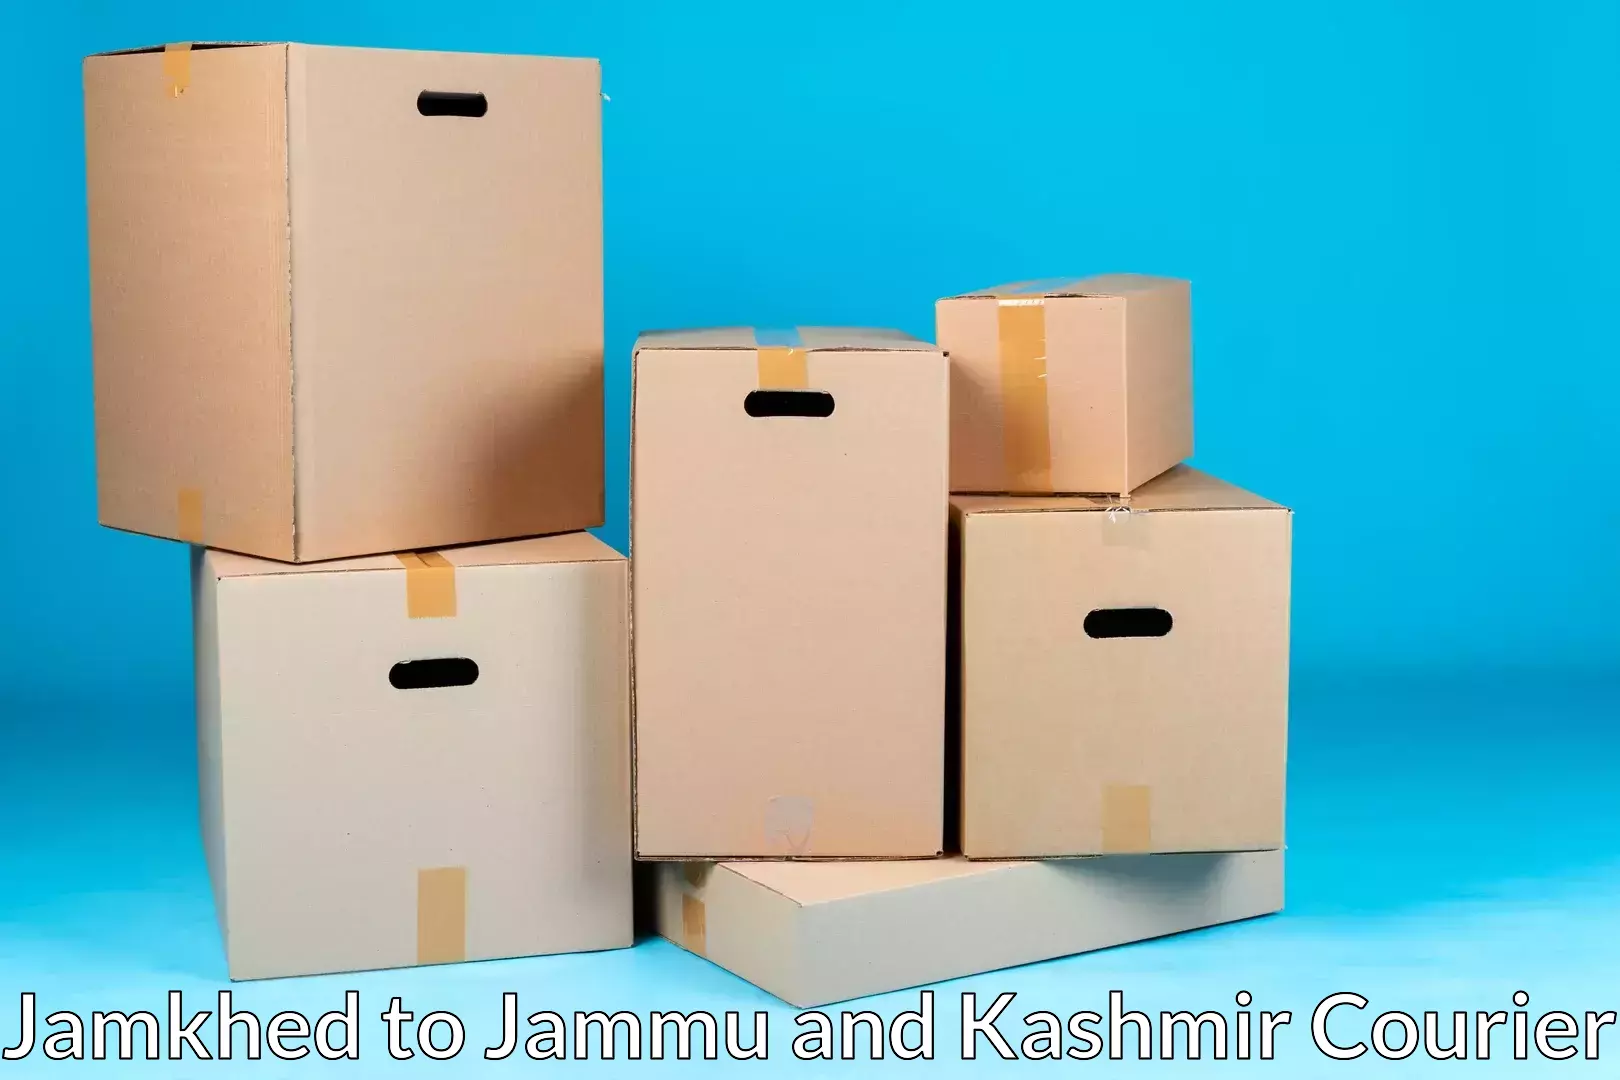 Furniture delivery service Jamkhed to Jammu and Kashmir